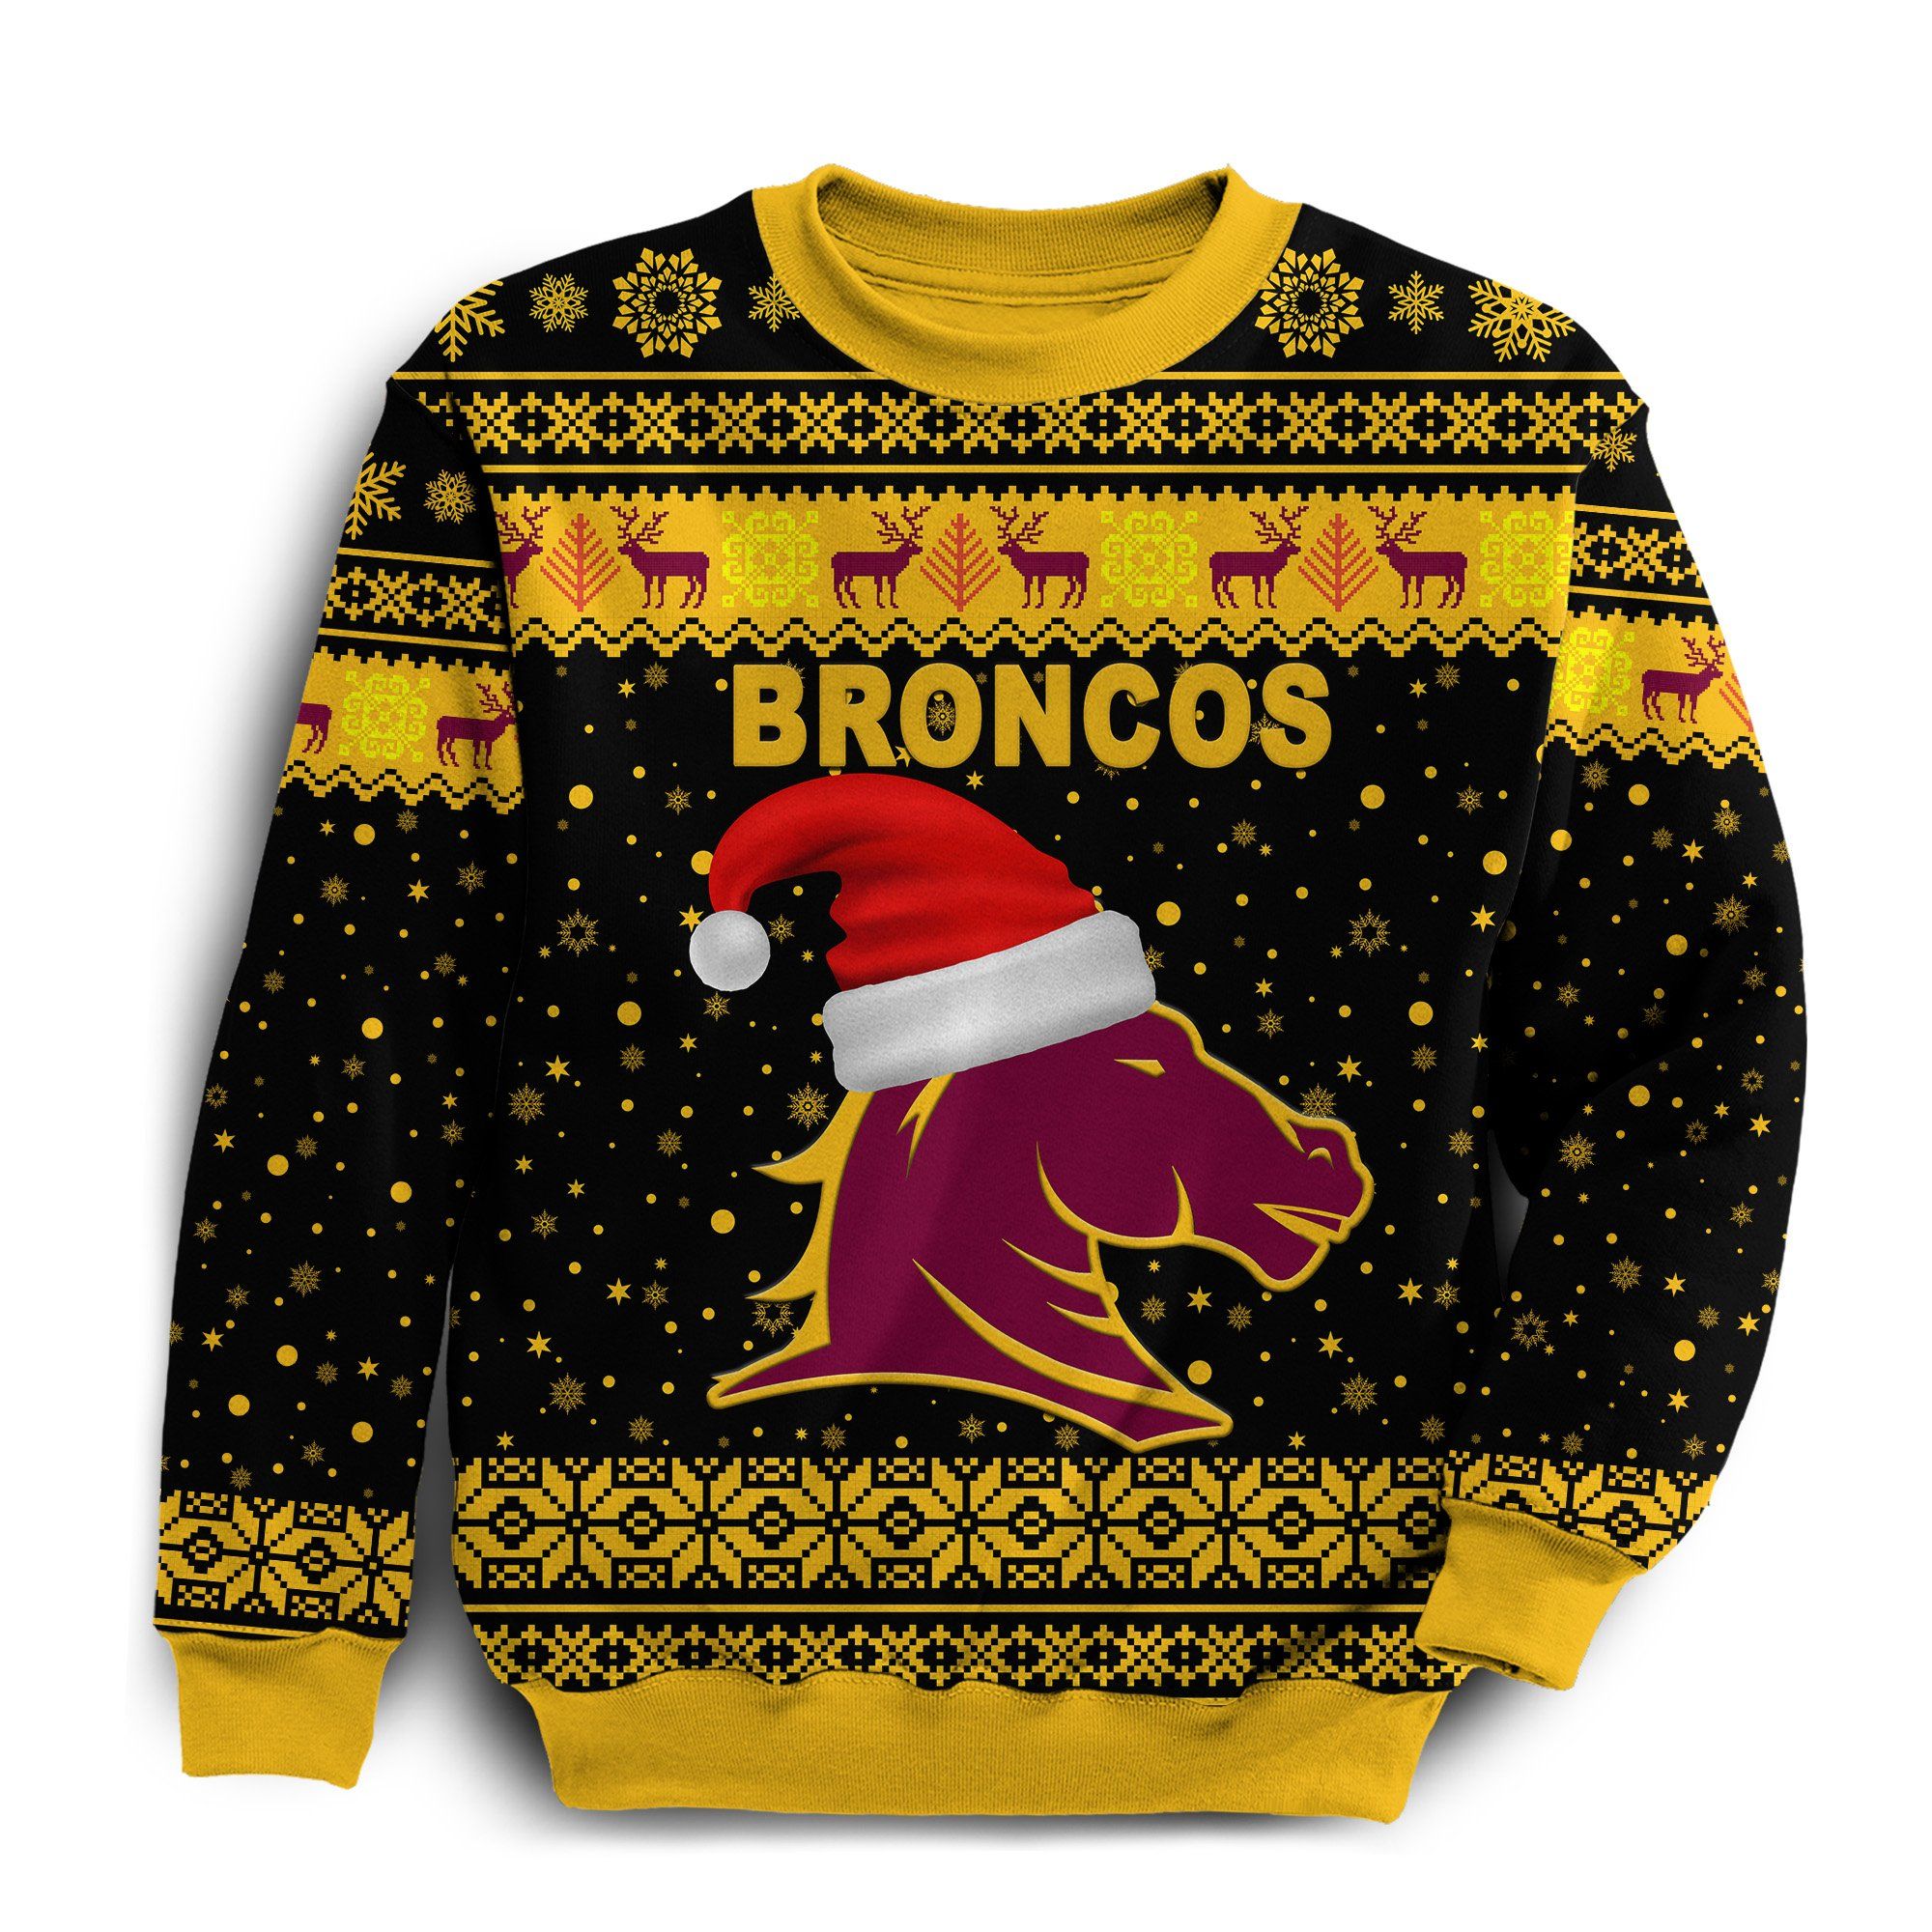 Brisbane Sweatshirt Broncos Christmas Unique Vibes - Black K8